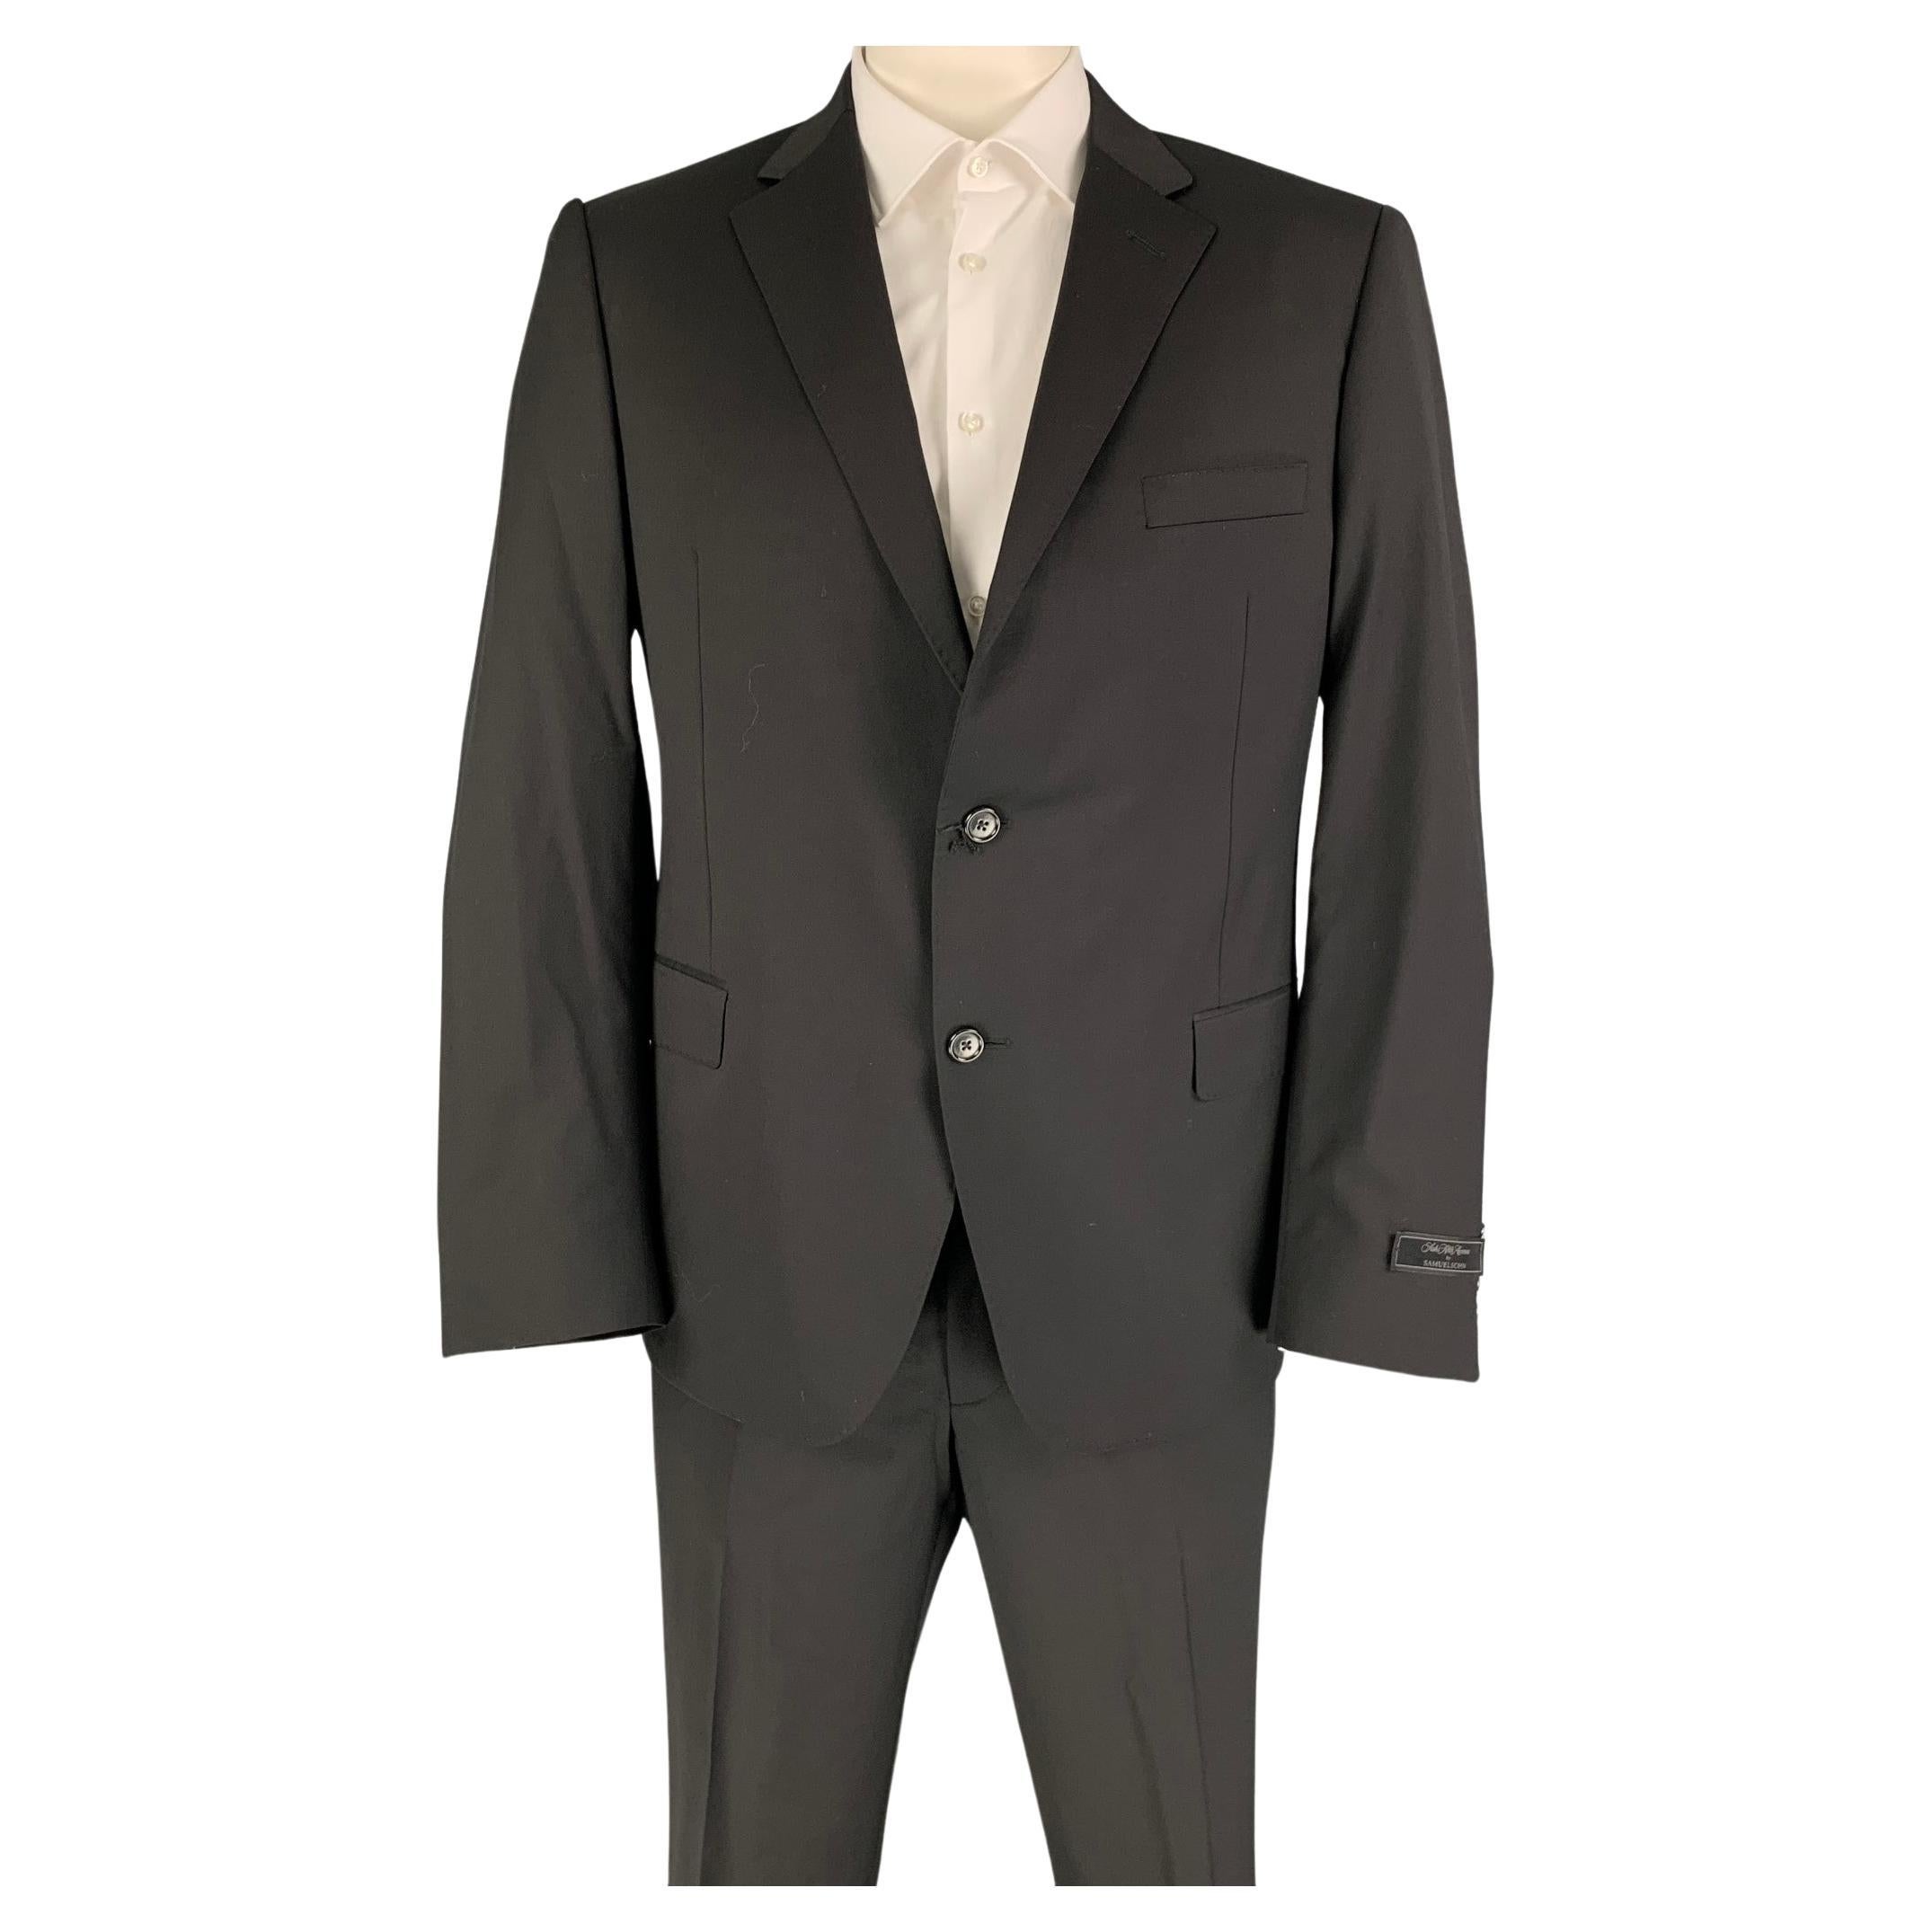 SAKS FIFTH AVENUE by Samuelsohn Size 44 Regular Black Wool Notch Lapel Suit